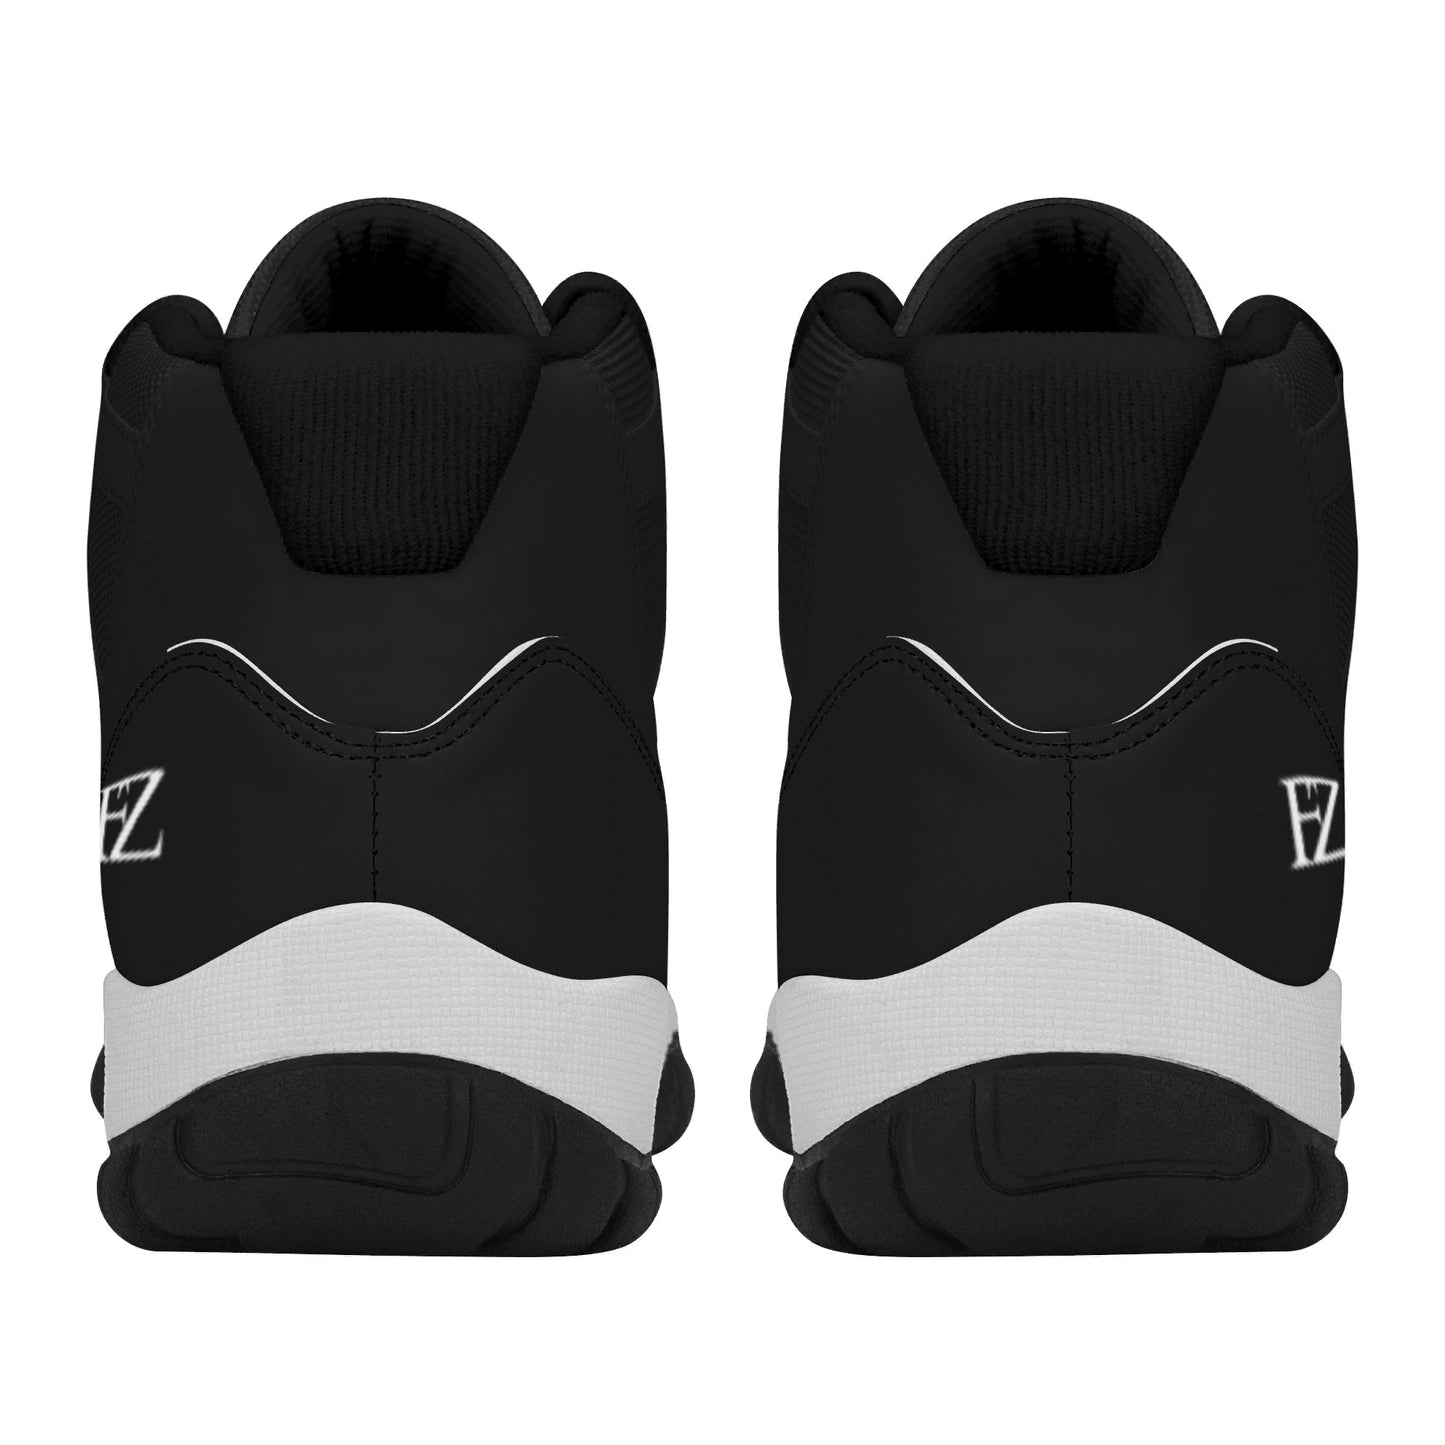 fz men's retro basketball sneakers